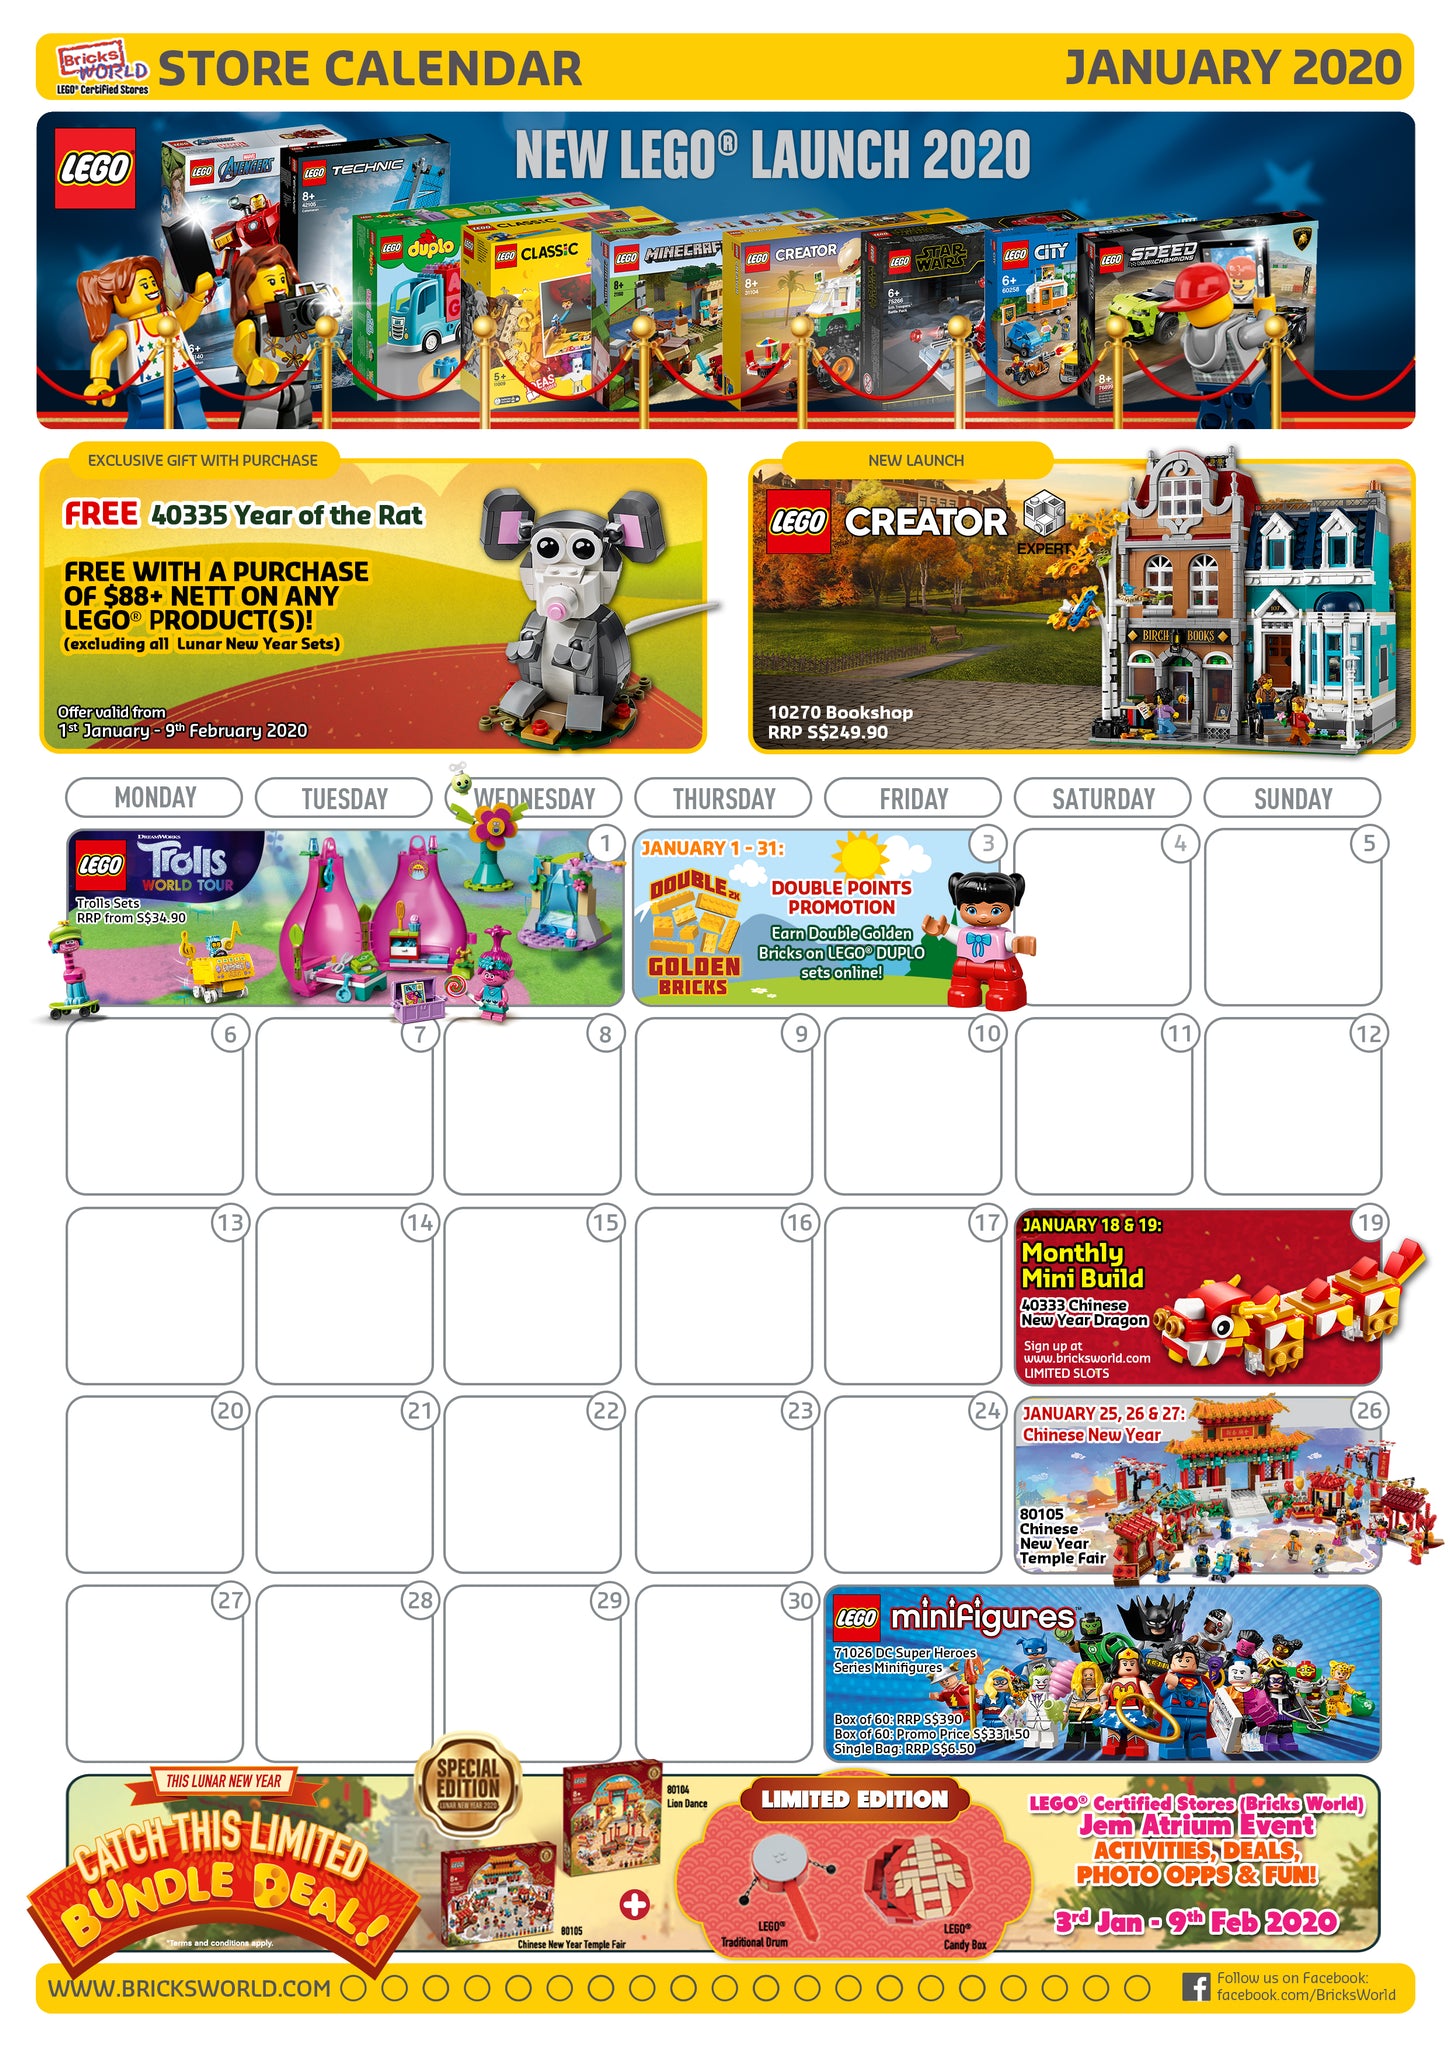 Lego Store Calendar March 2021 / Brickfinder LEGO Store Calendar